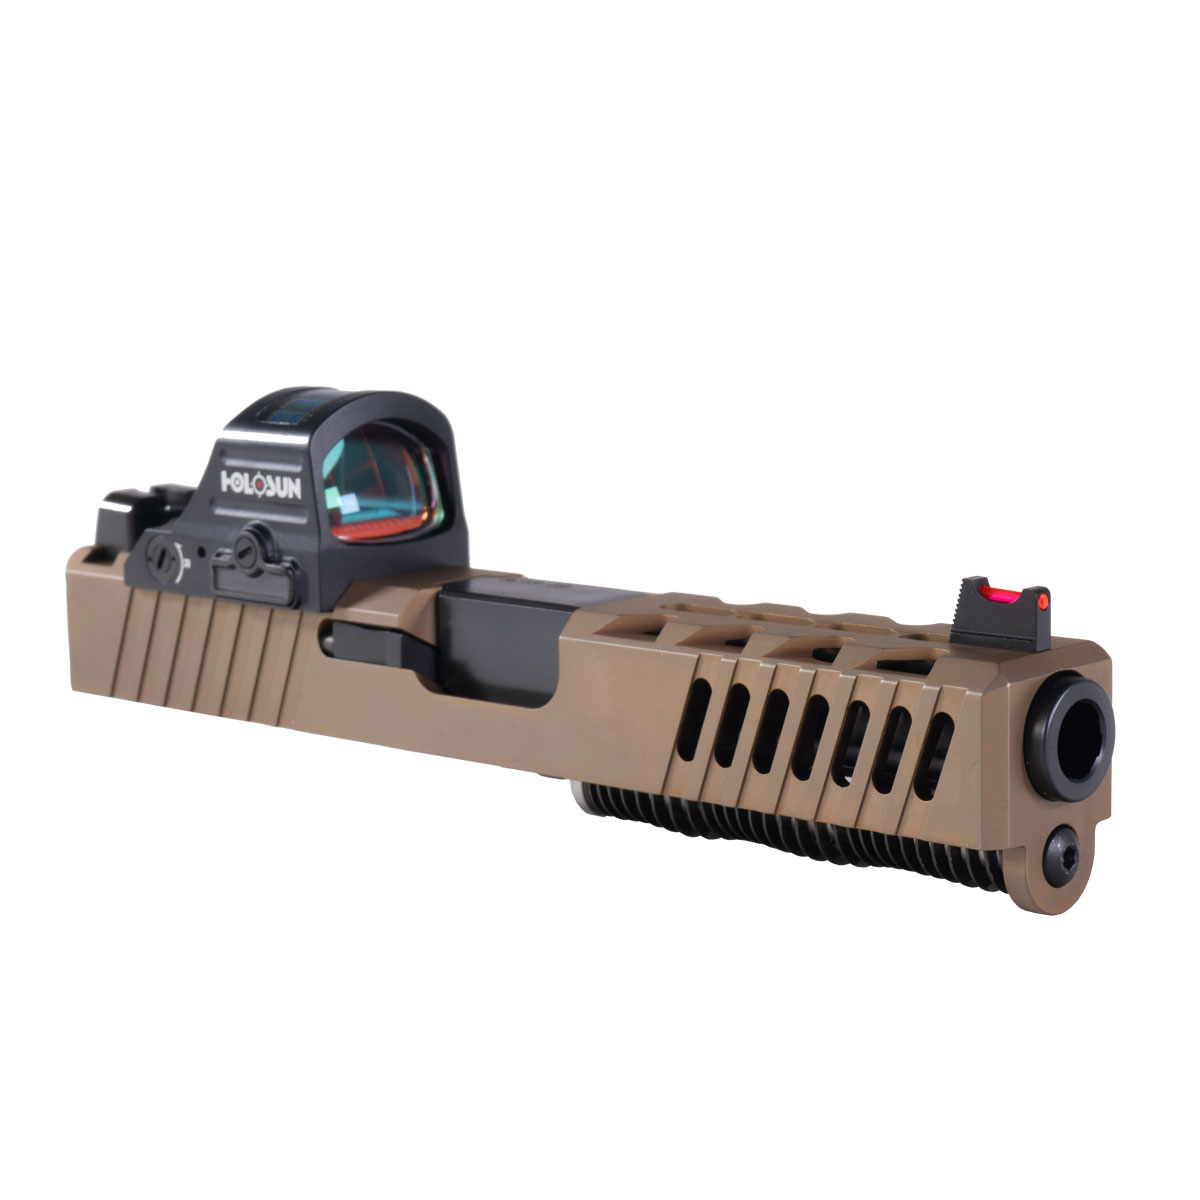 MMC 'Copperhead' 9mm Complete Slide Kit - Glock 19 Compatible